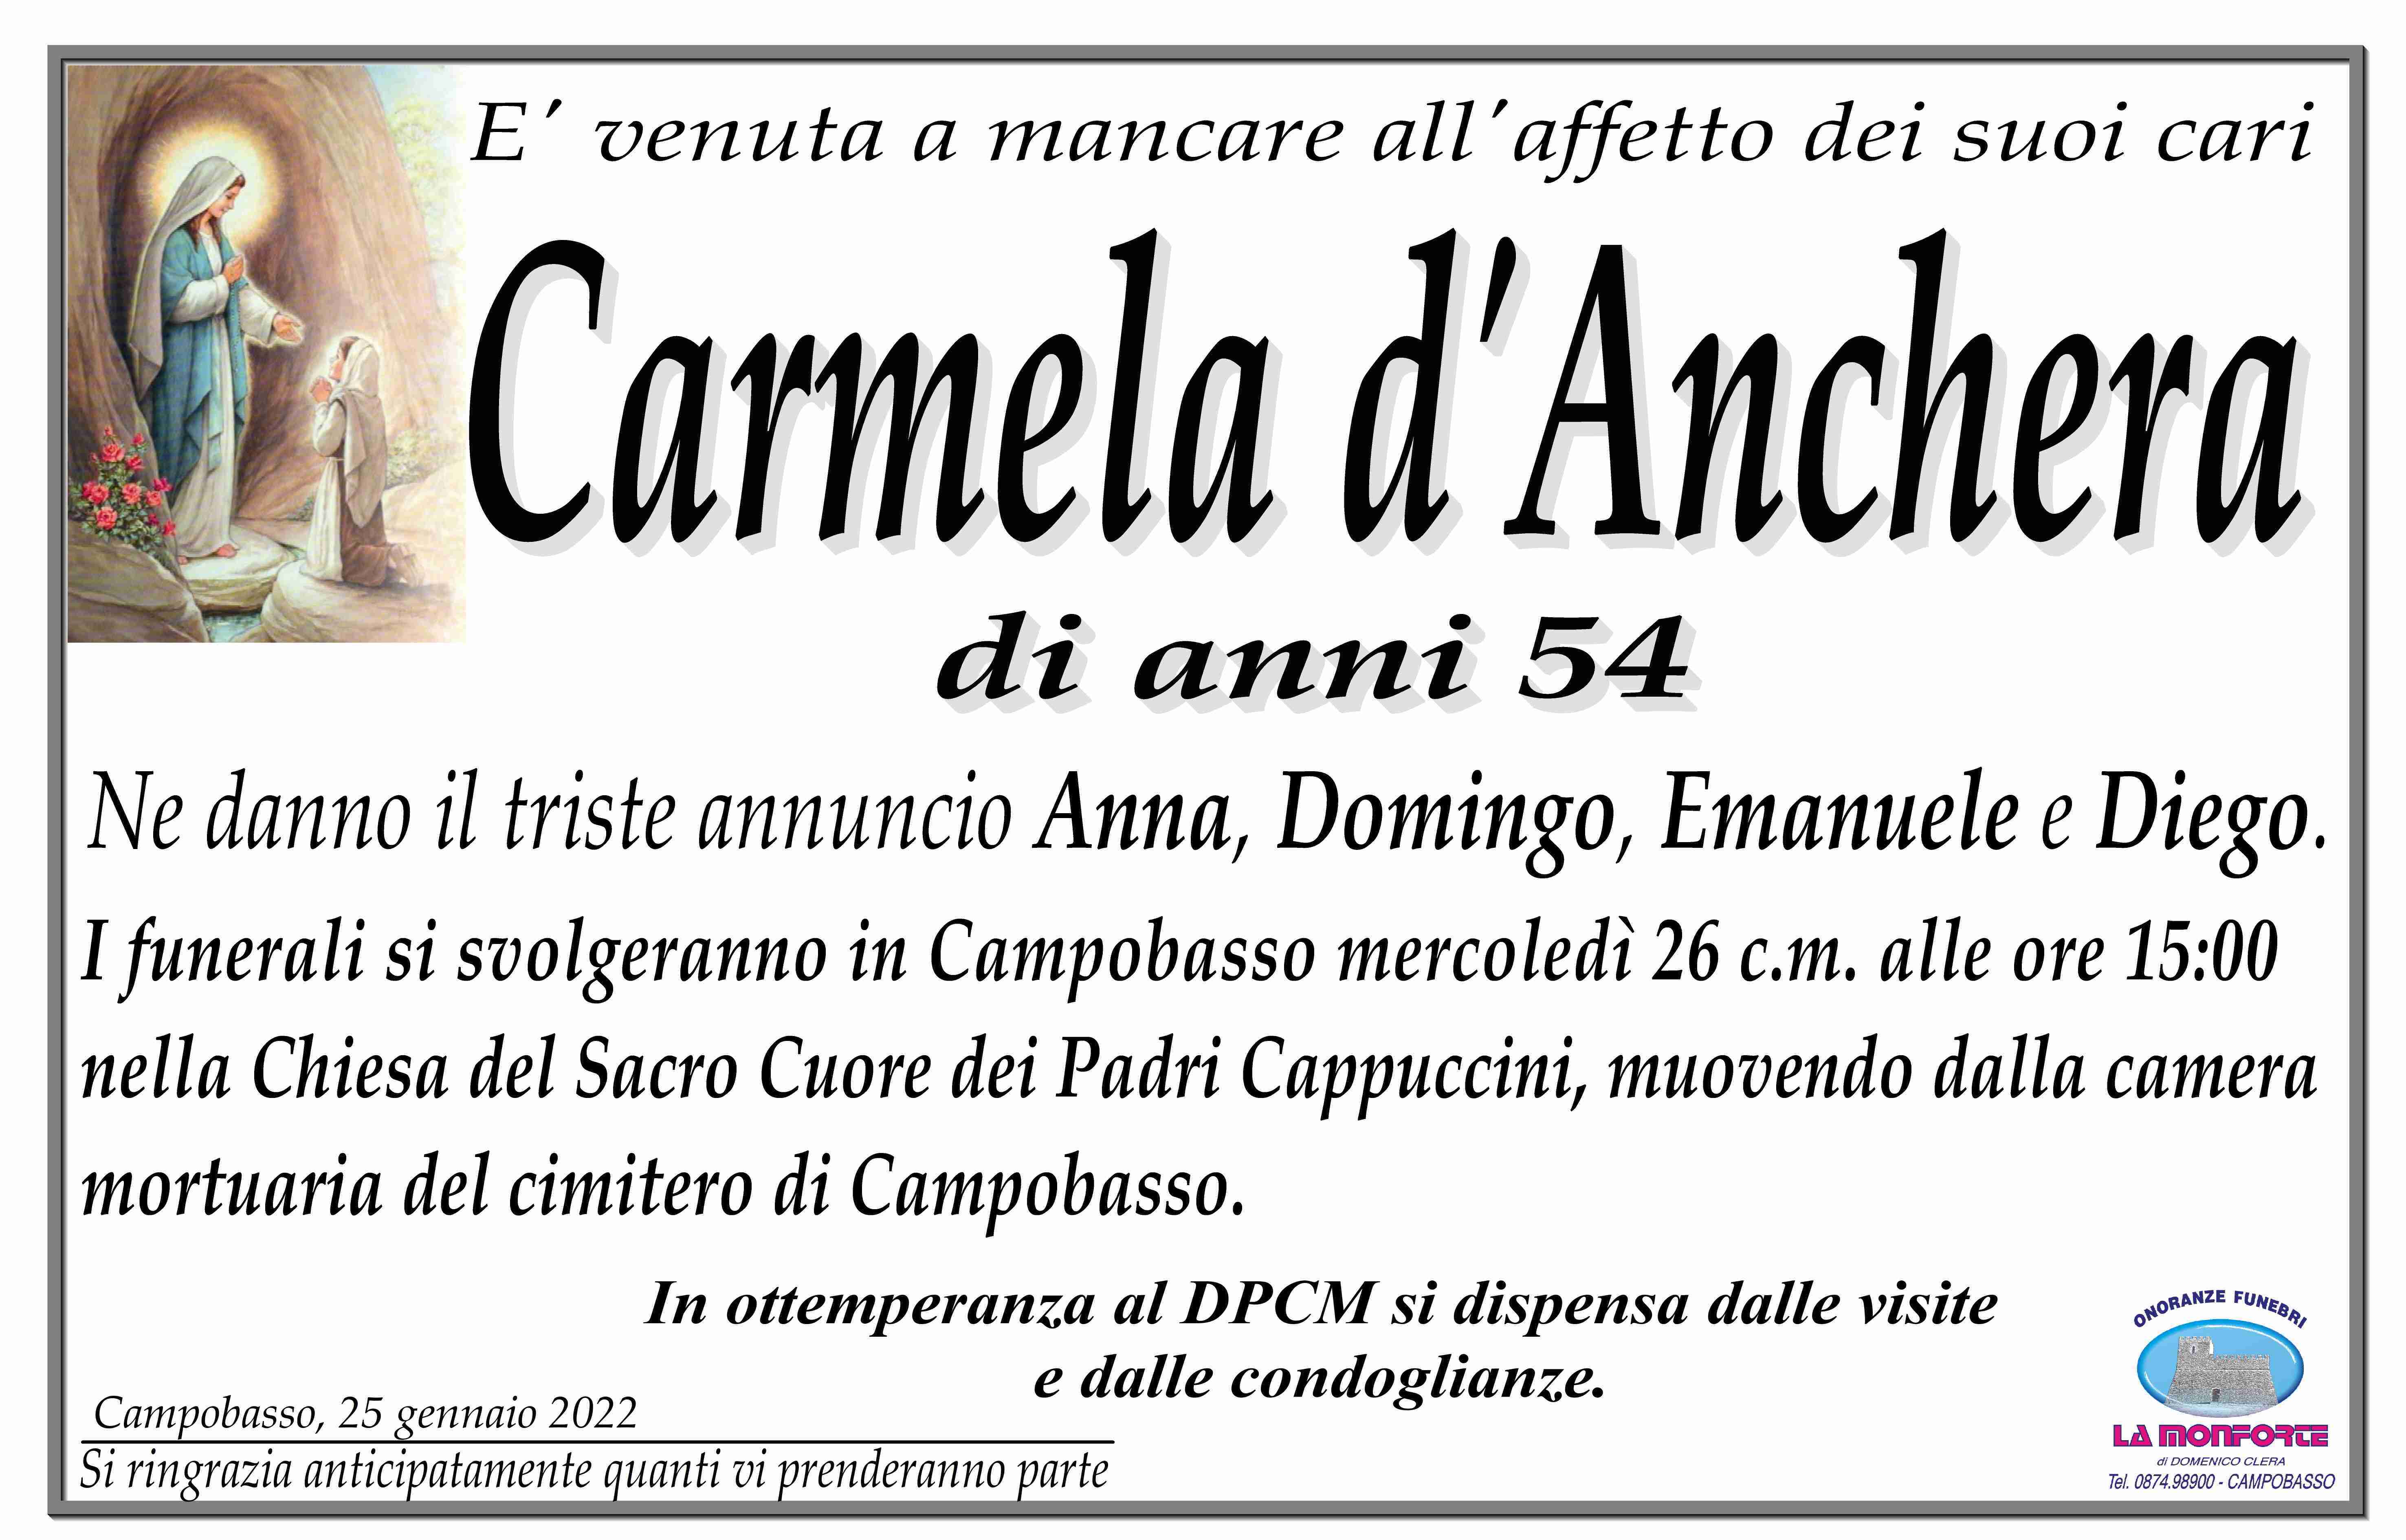 Carmela d'Anchera